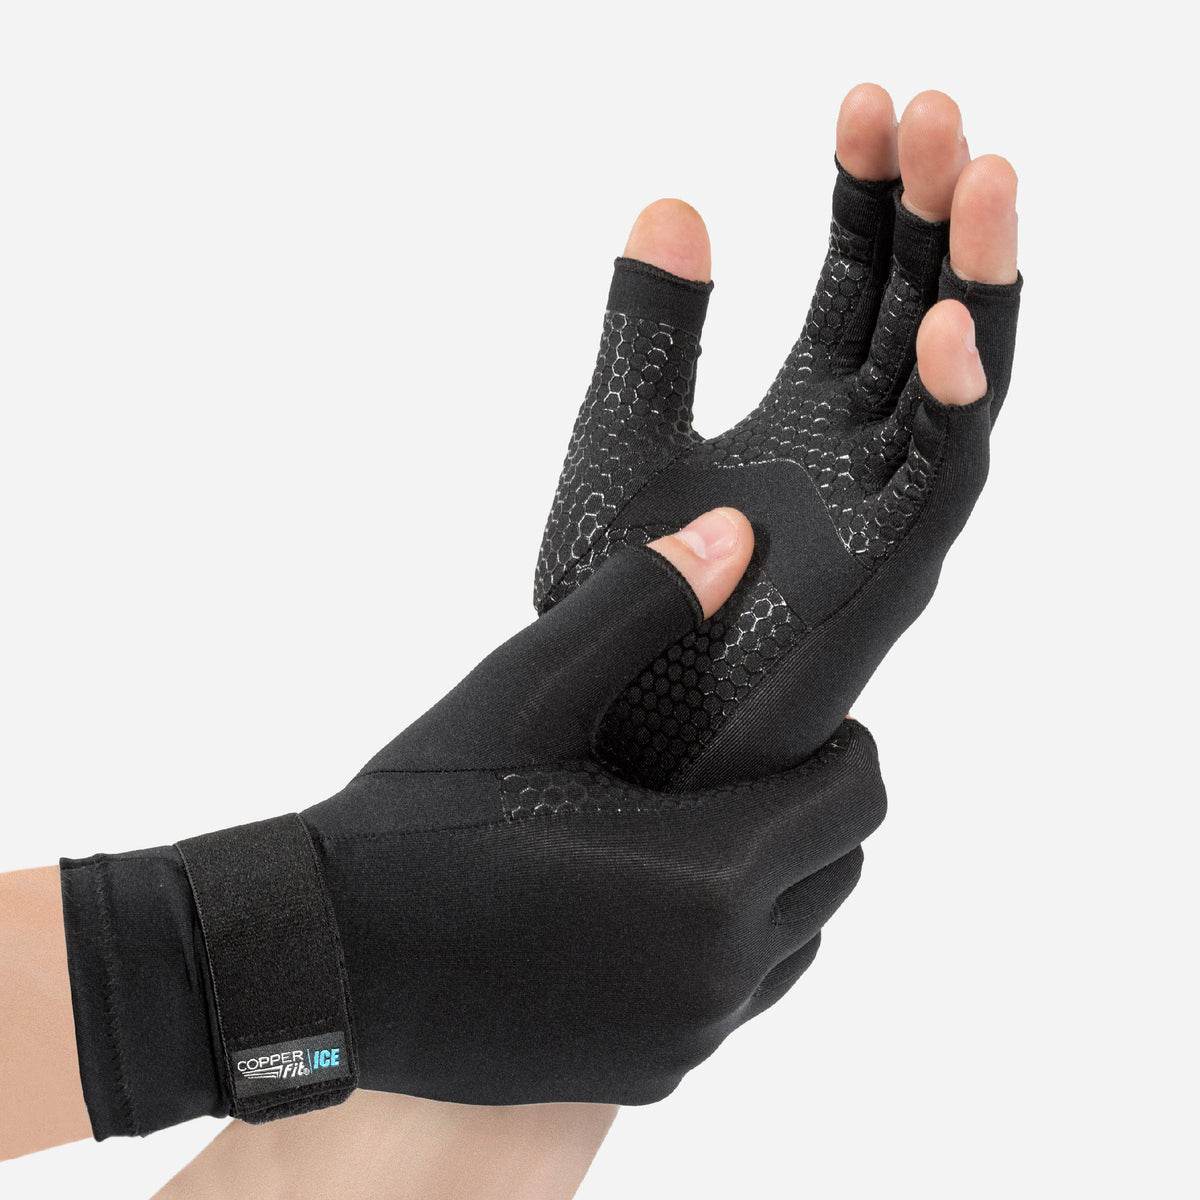 Tommie Copper unisex Compression Gloves/Wrist Sleeve, Black, Medium, Men's